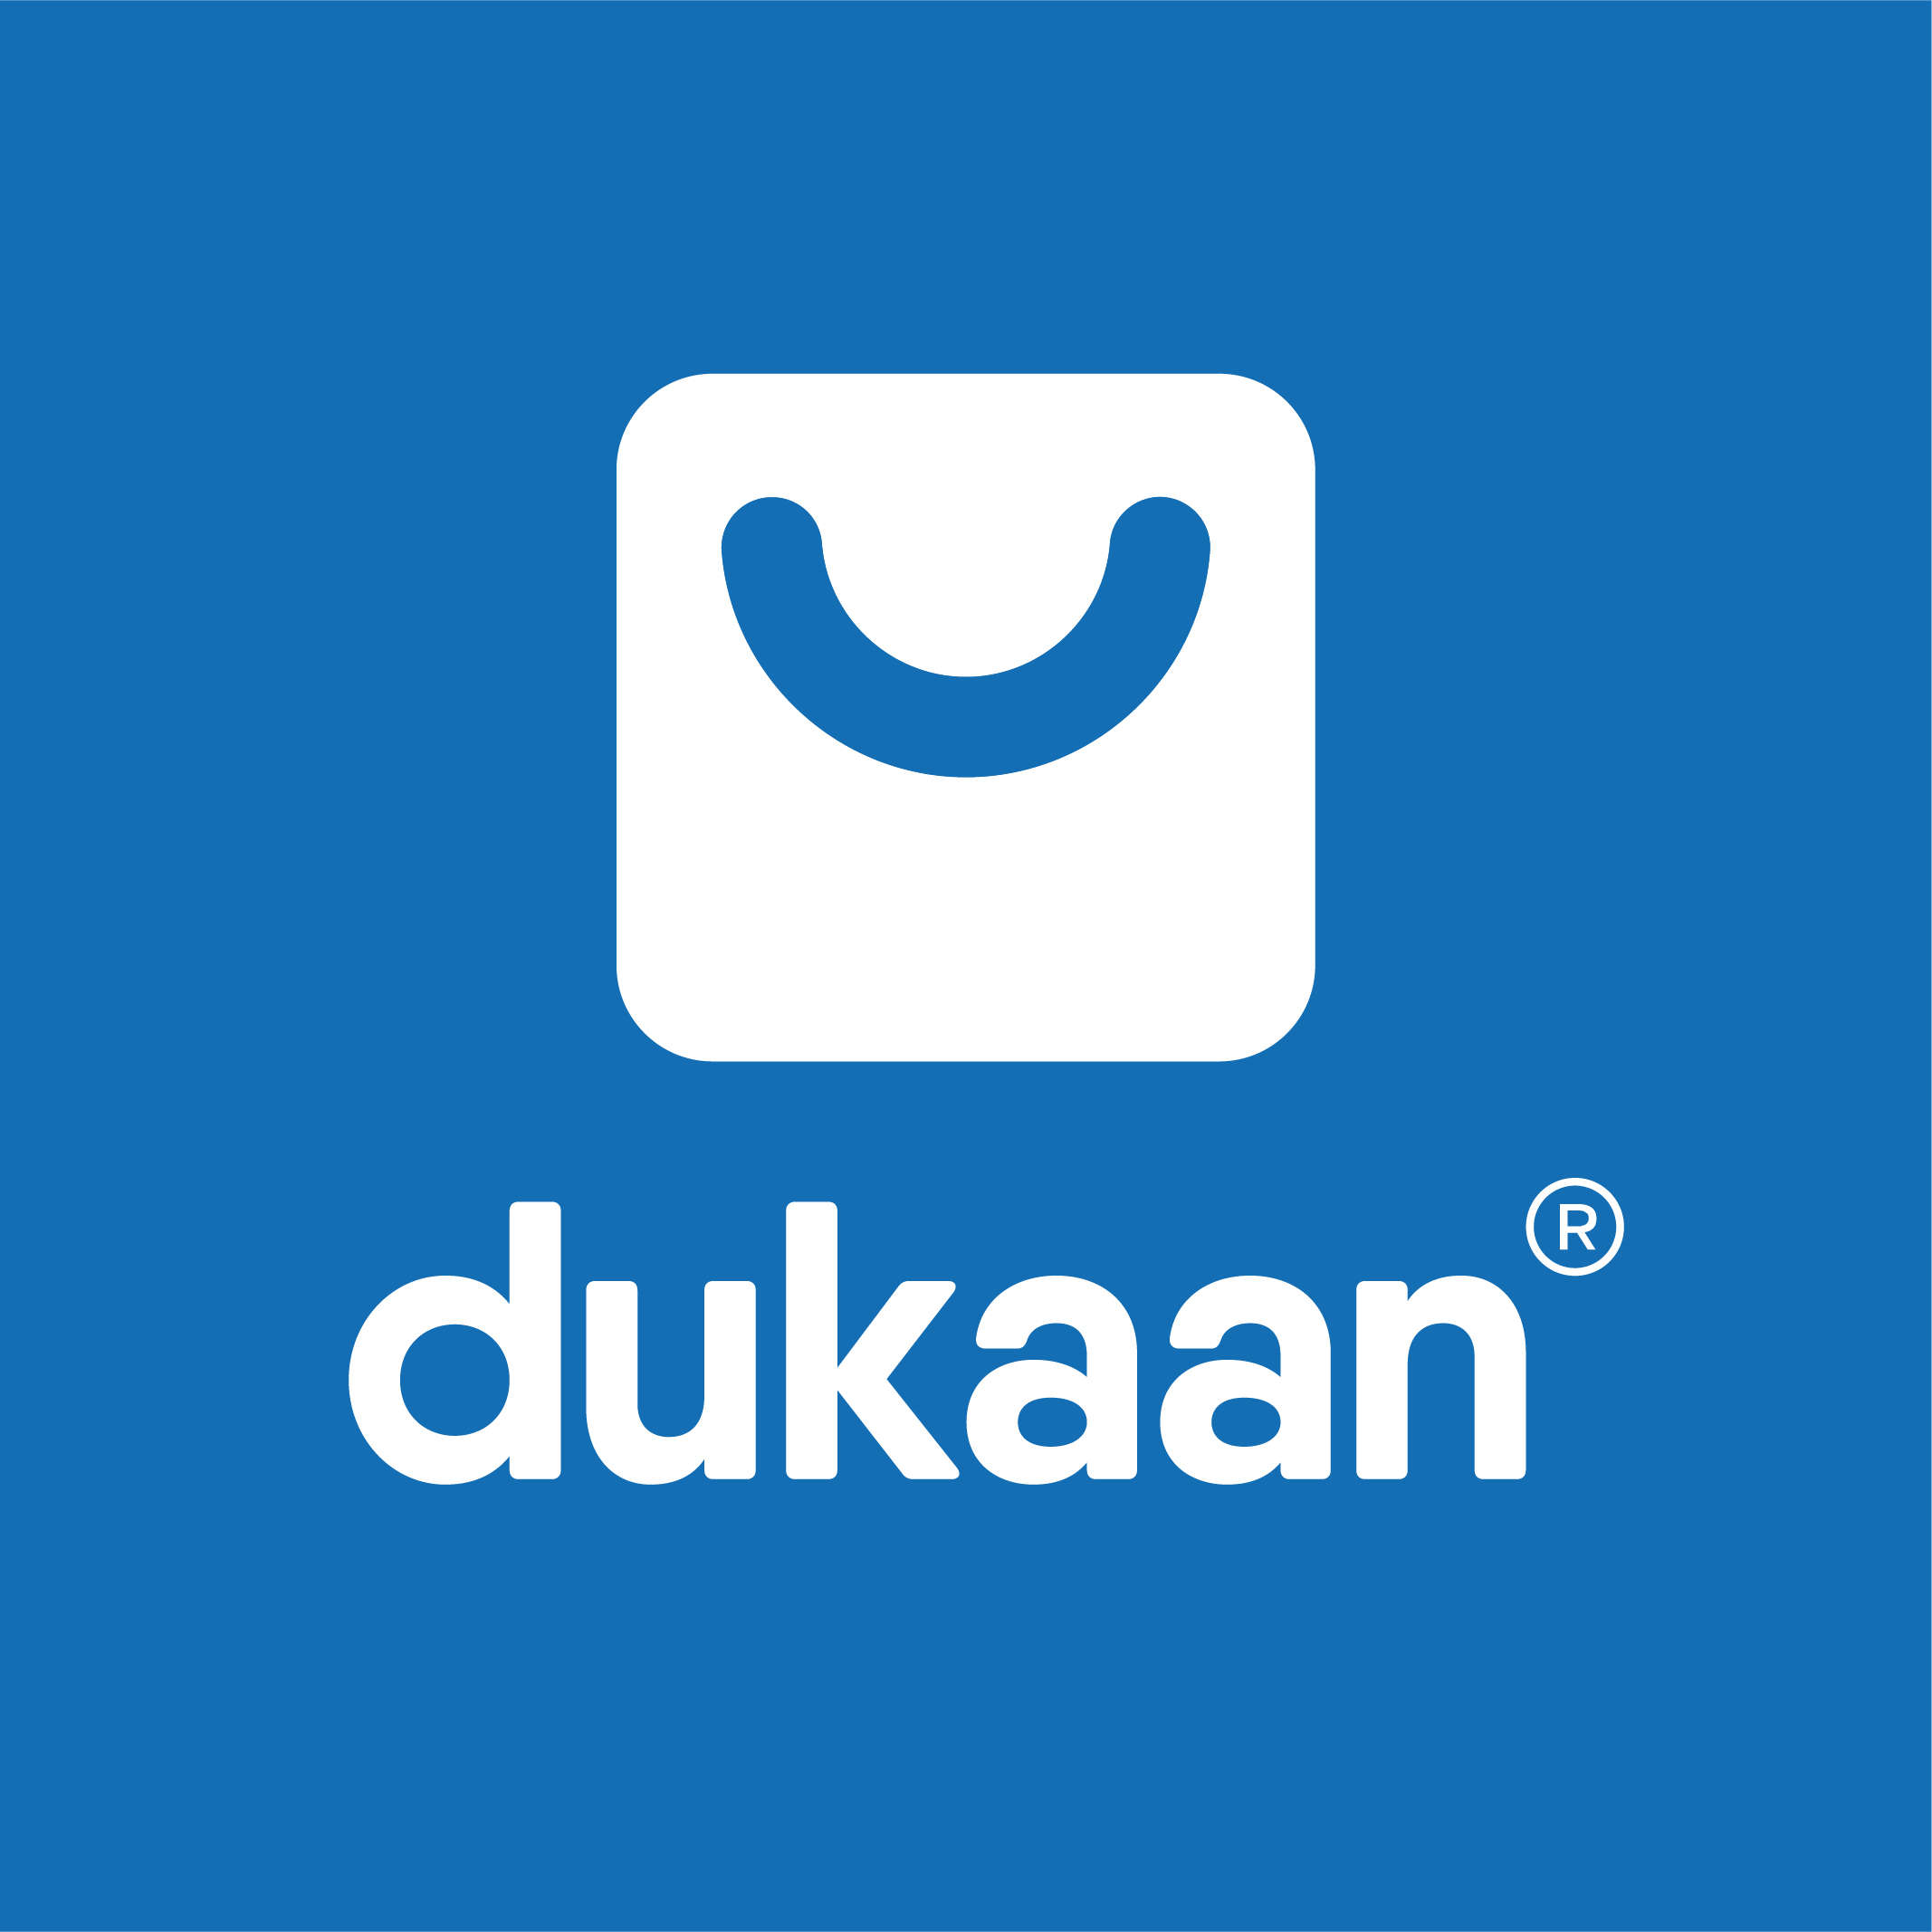 Dukaan® - Crunchbase Company Profile & Funding